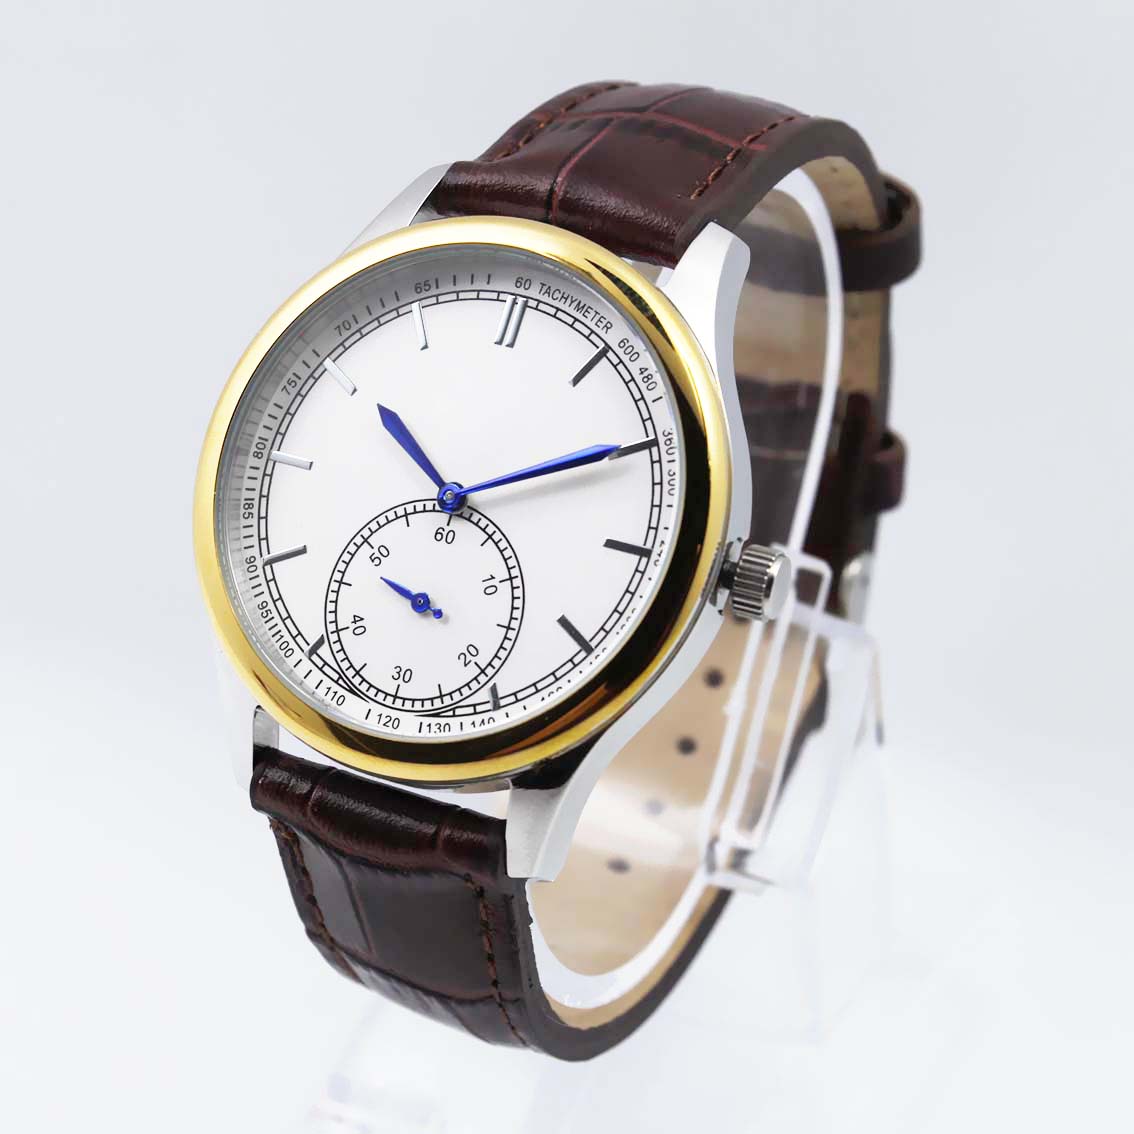 #02080Men's wristwatch quartz analog leather strap watch